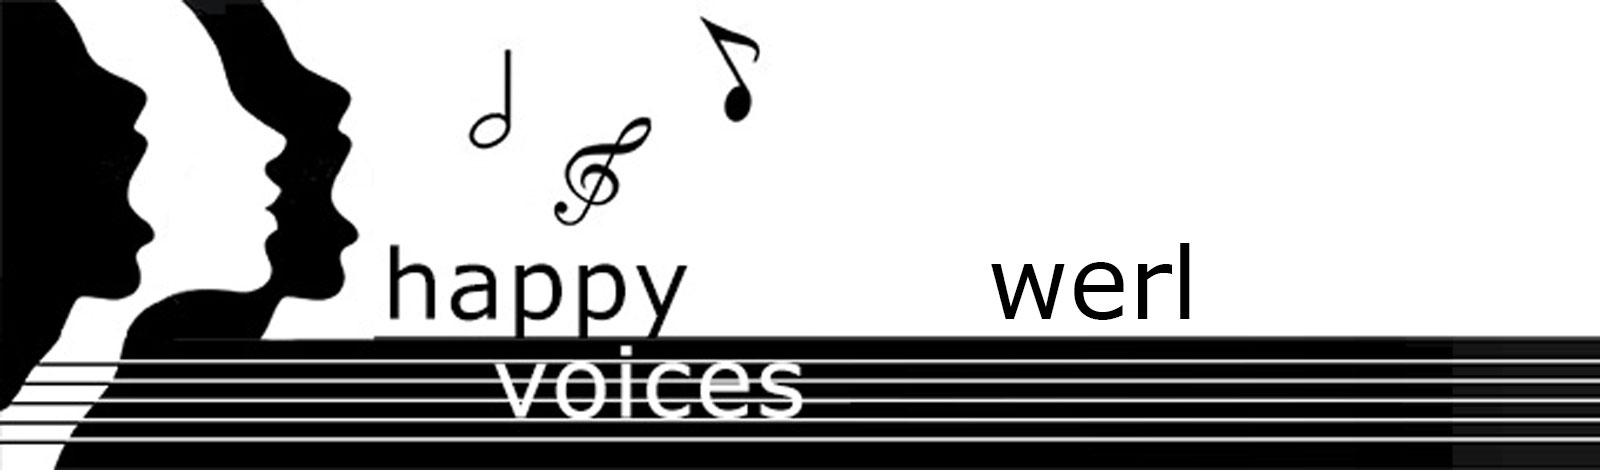 happy-voices-werl